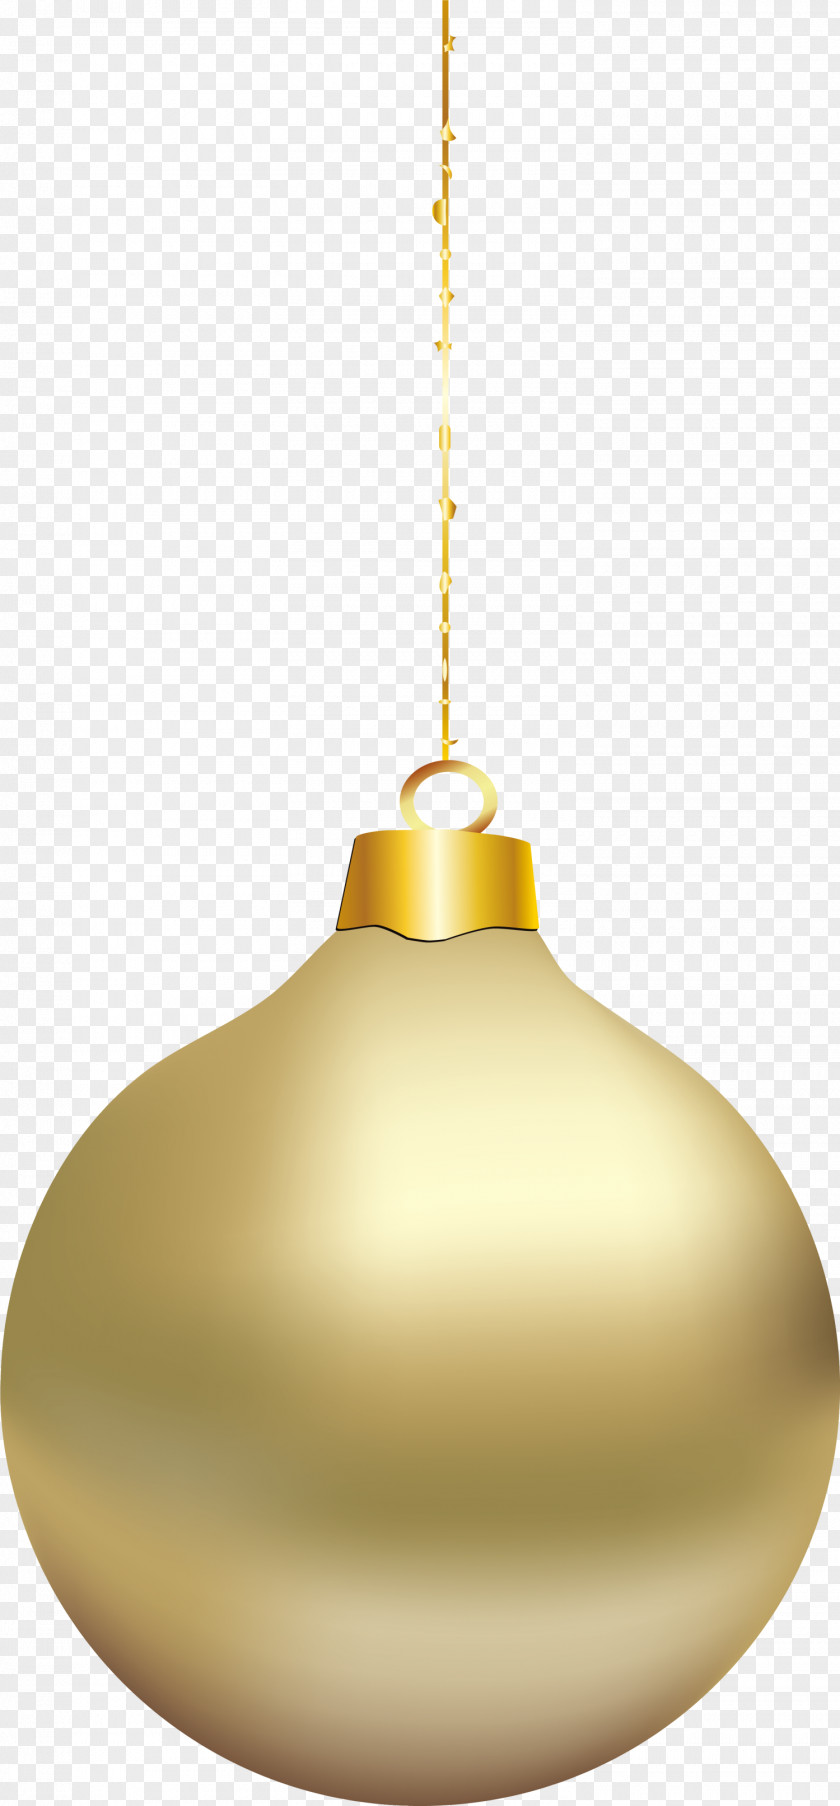 Golden Atmosphere Ornaments Christmas Ornament Motif PNG